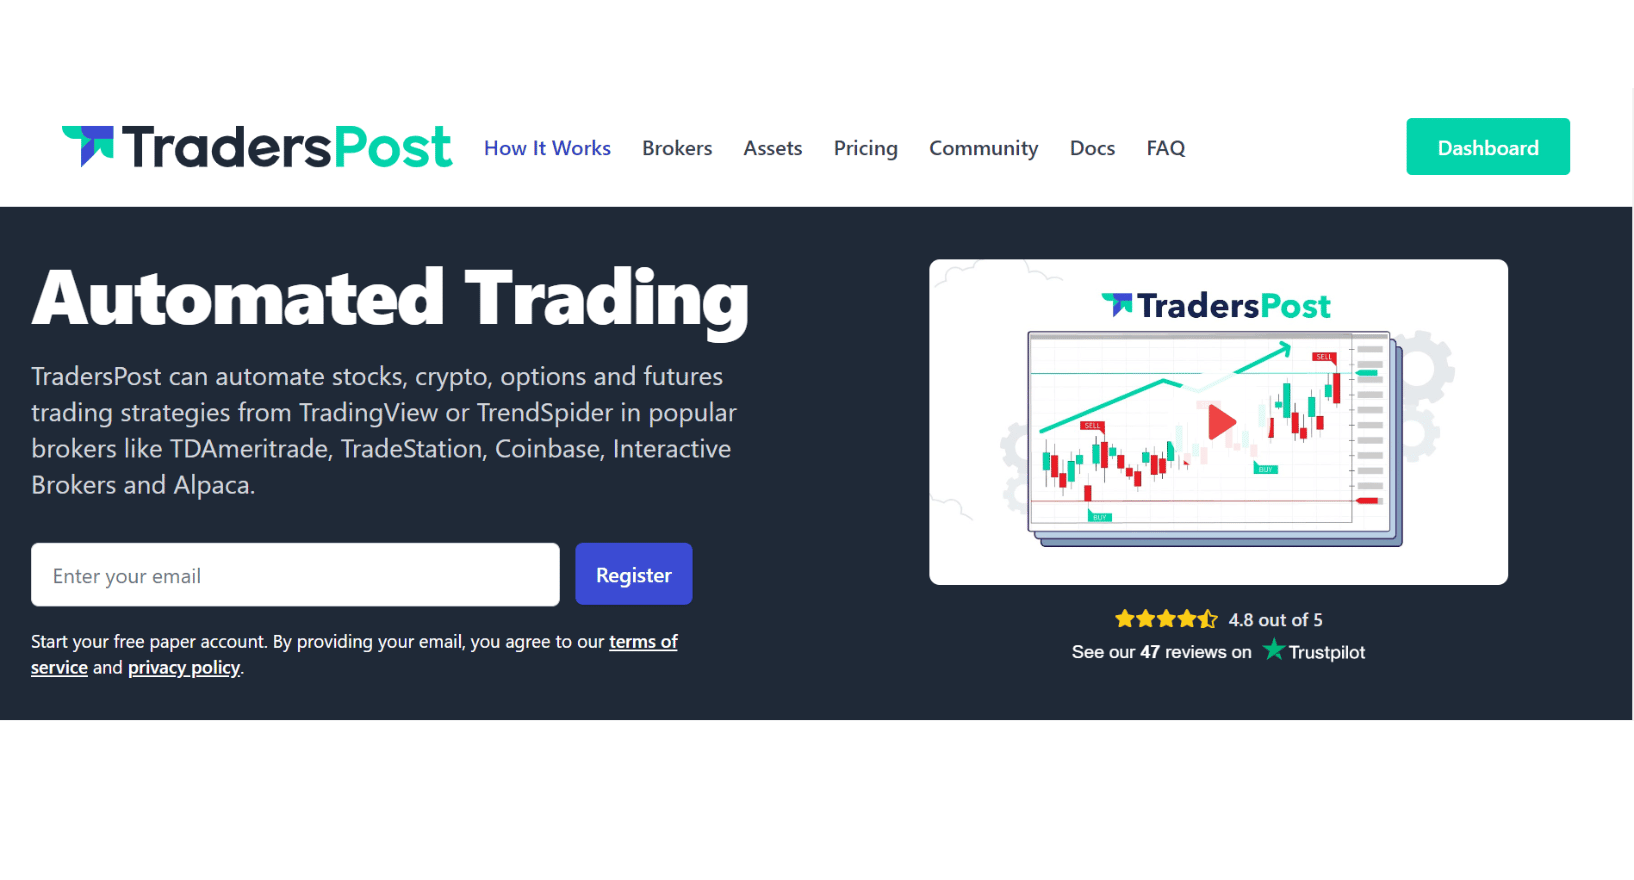 TradersPost